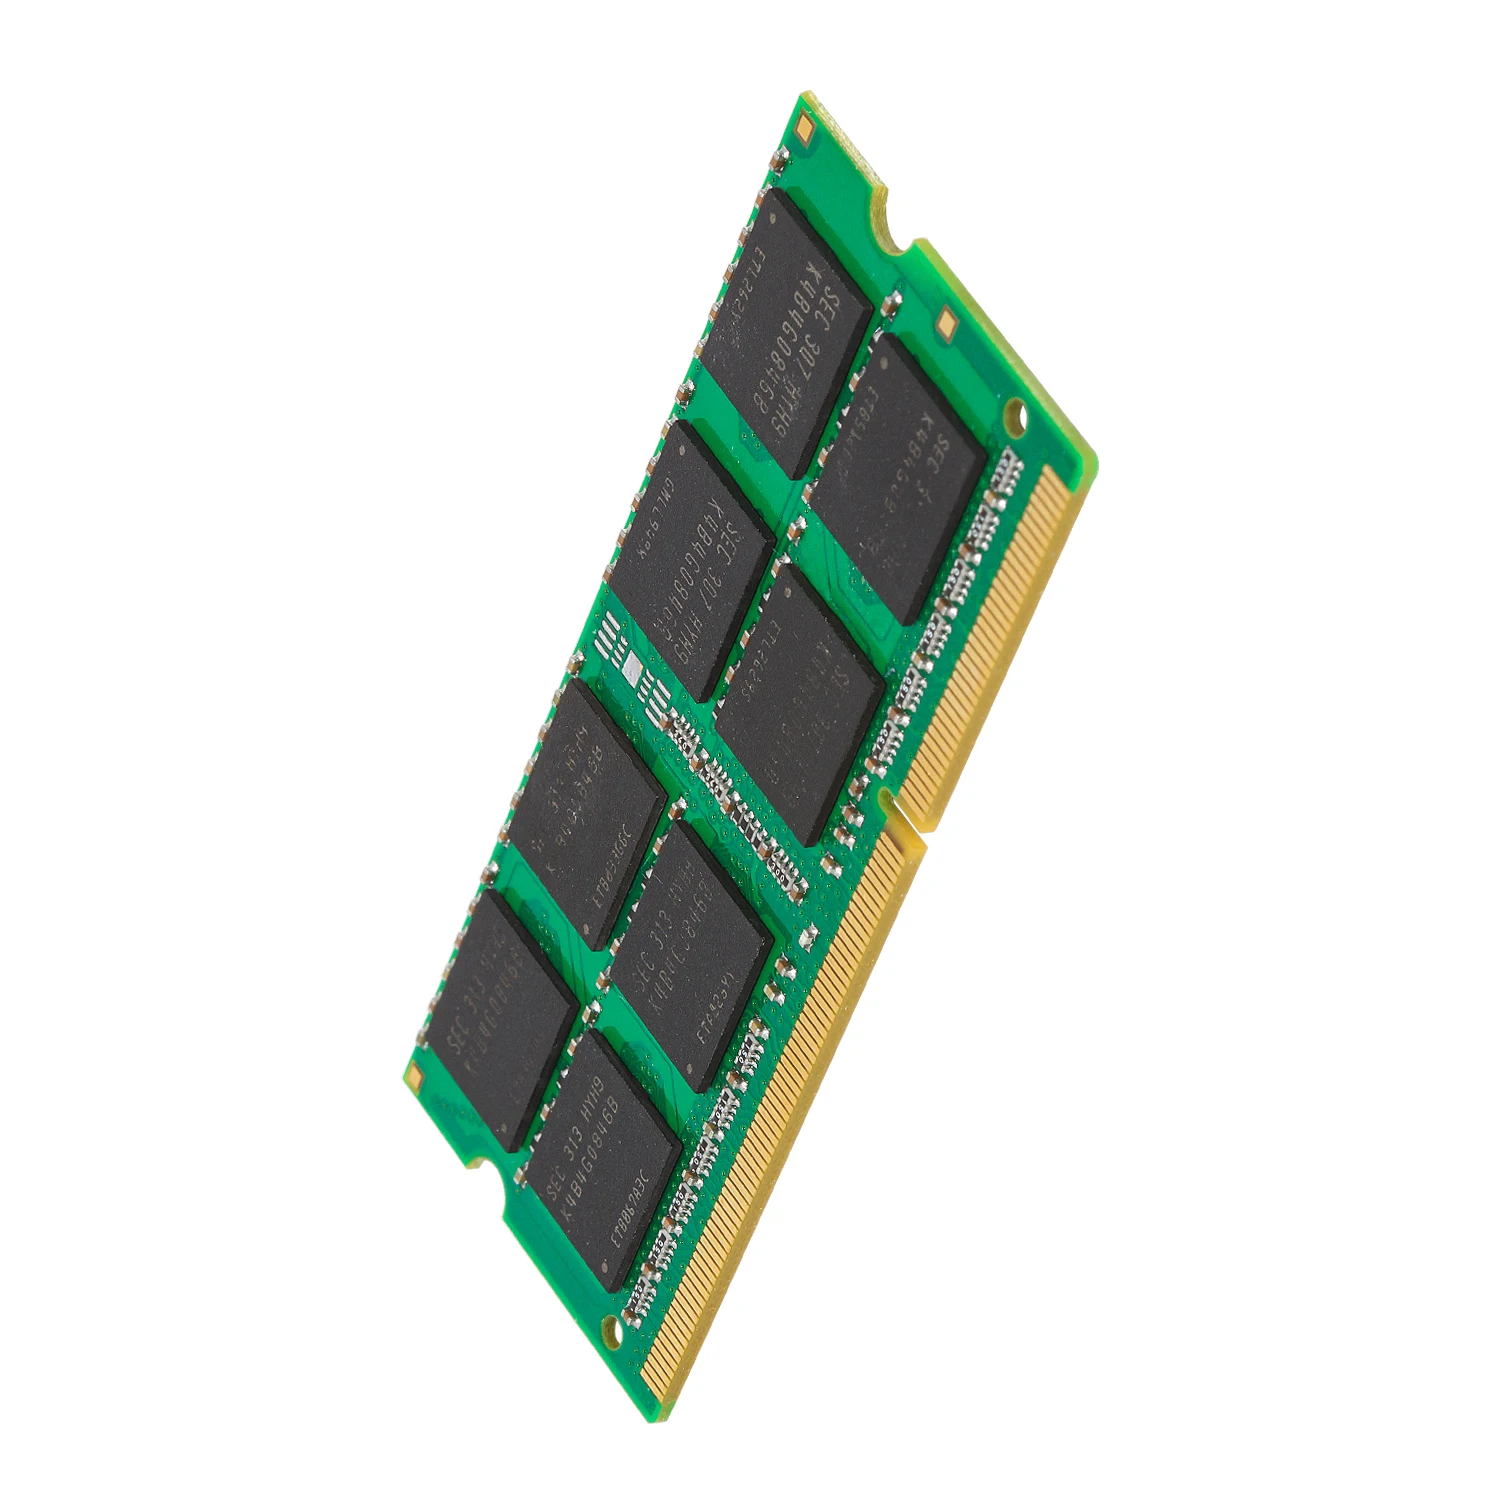 DDR3   LAPTOP    4GB  1333MHZ